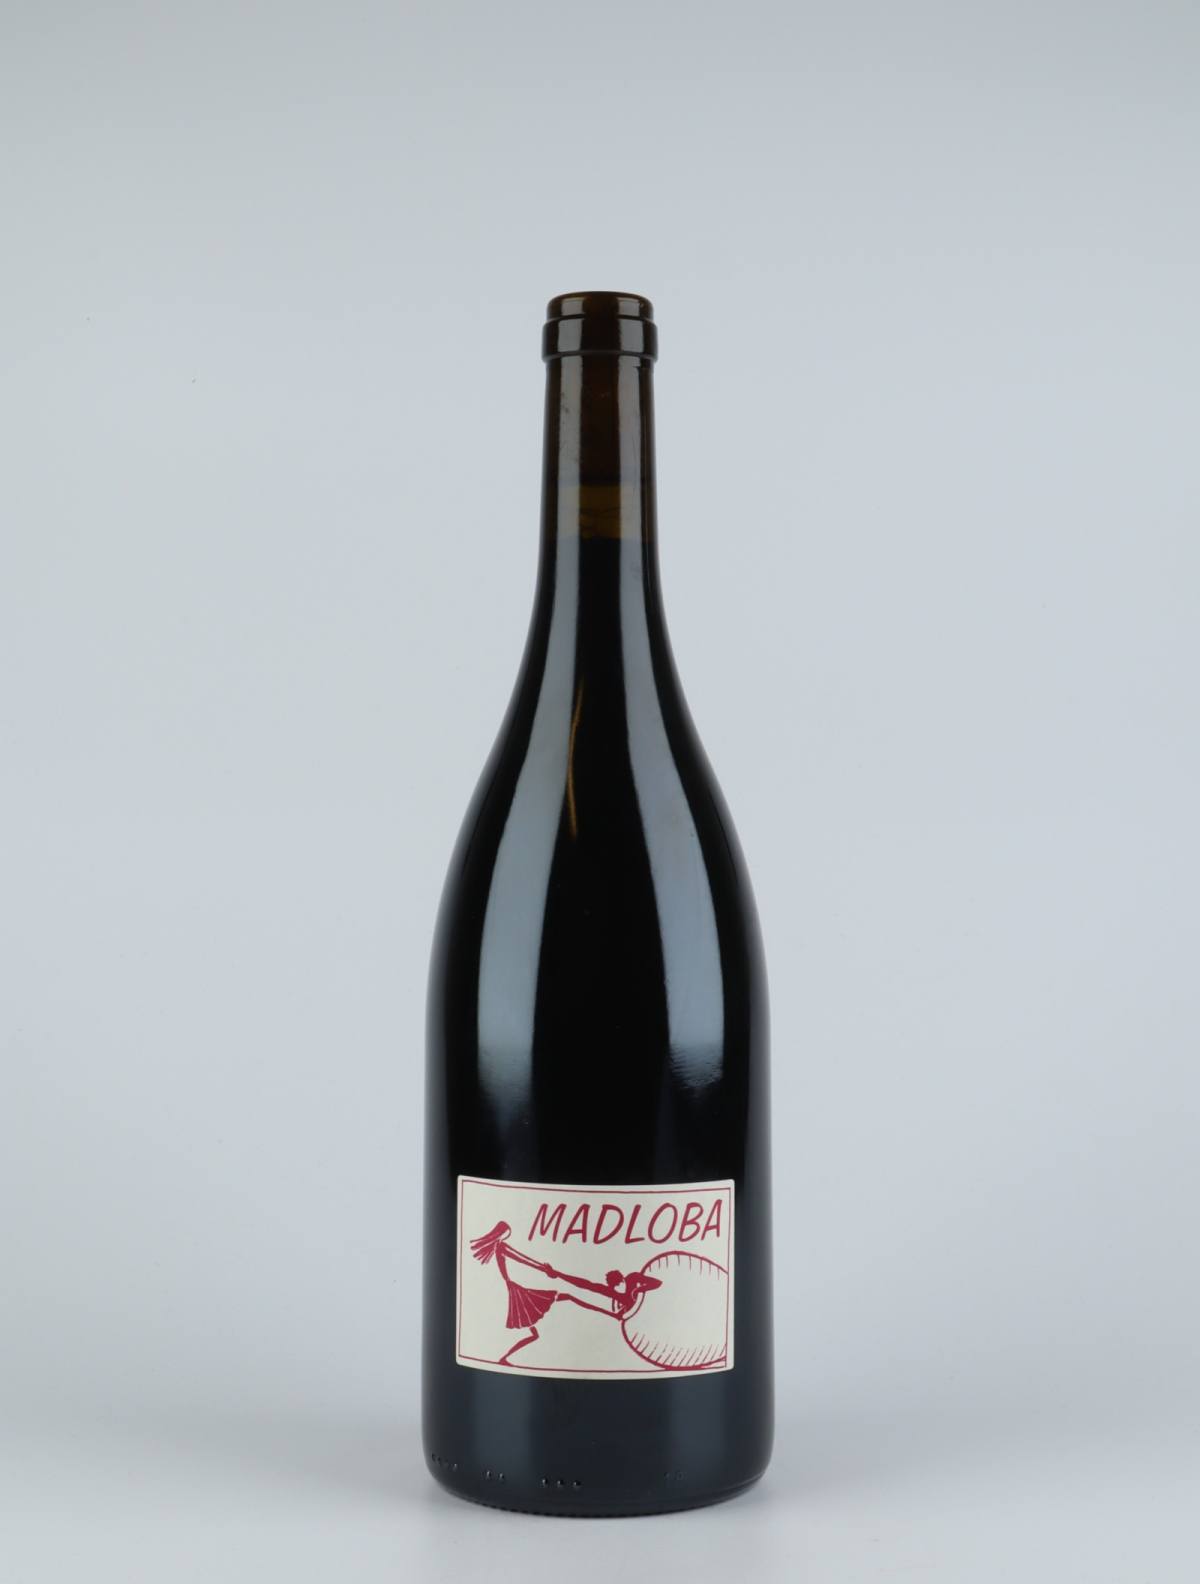 A bottle 2014 Saint-Joseph Madloba Red wine from Domaine des Miquettes, Rhône in France